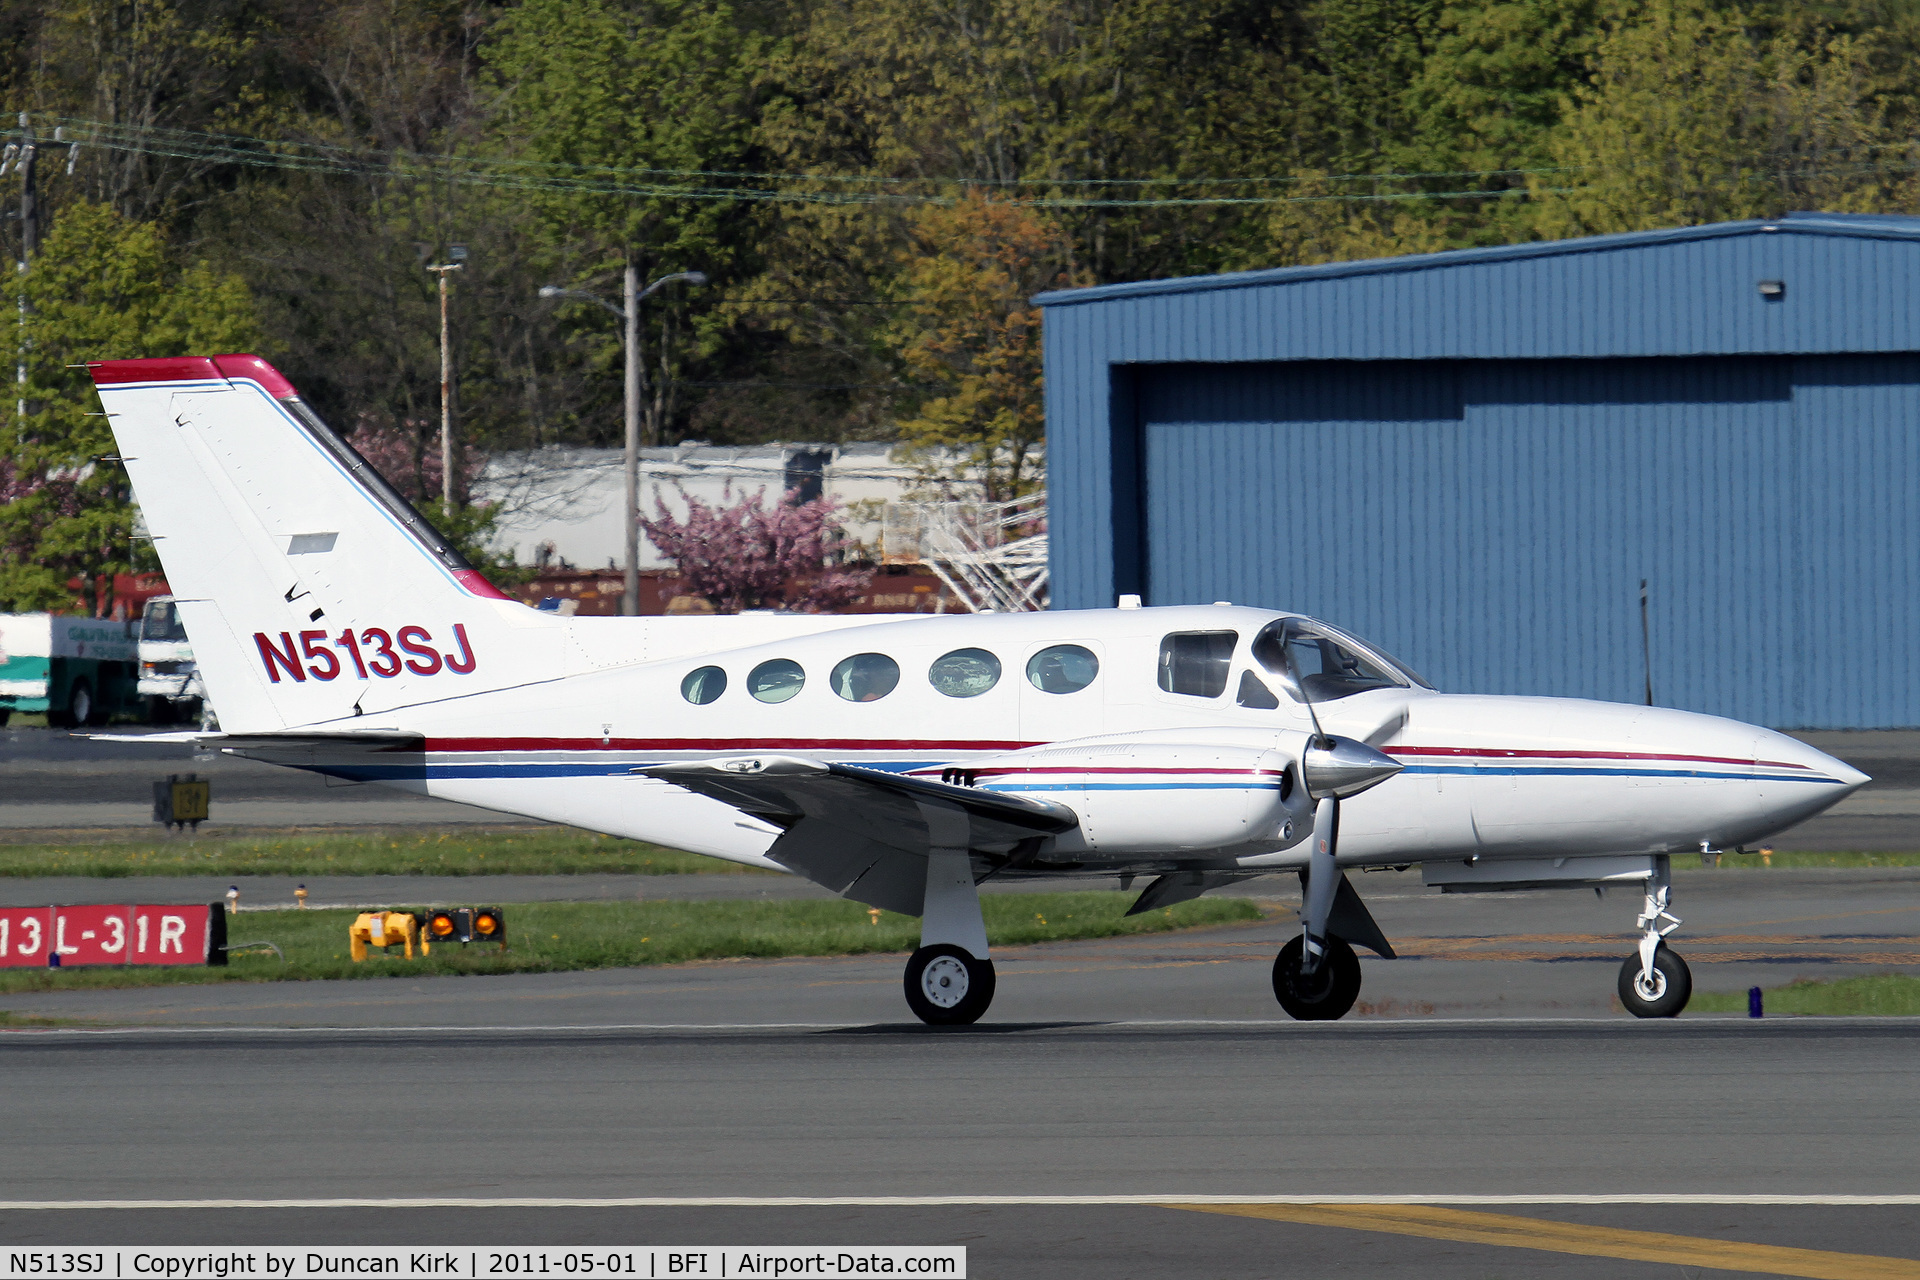 N513SJ, 1975 Cessna 421C Golden Eagle C/N 421C0043, Many Cessna 421's are still flying